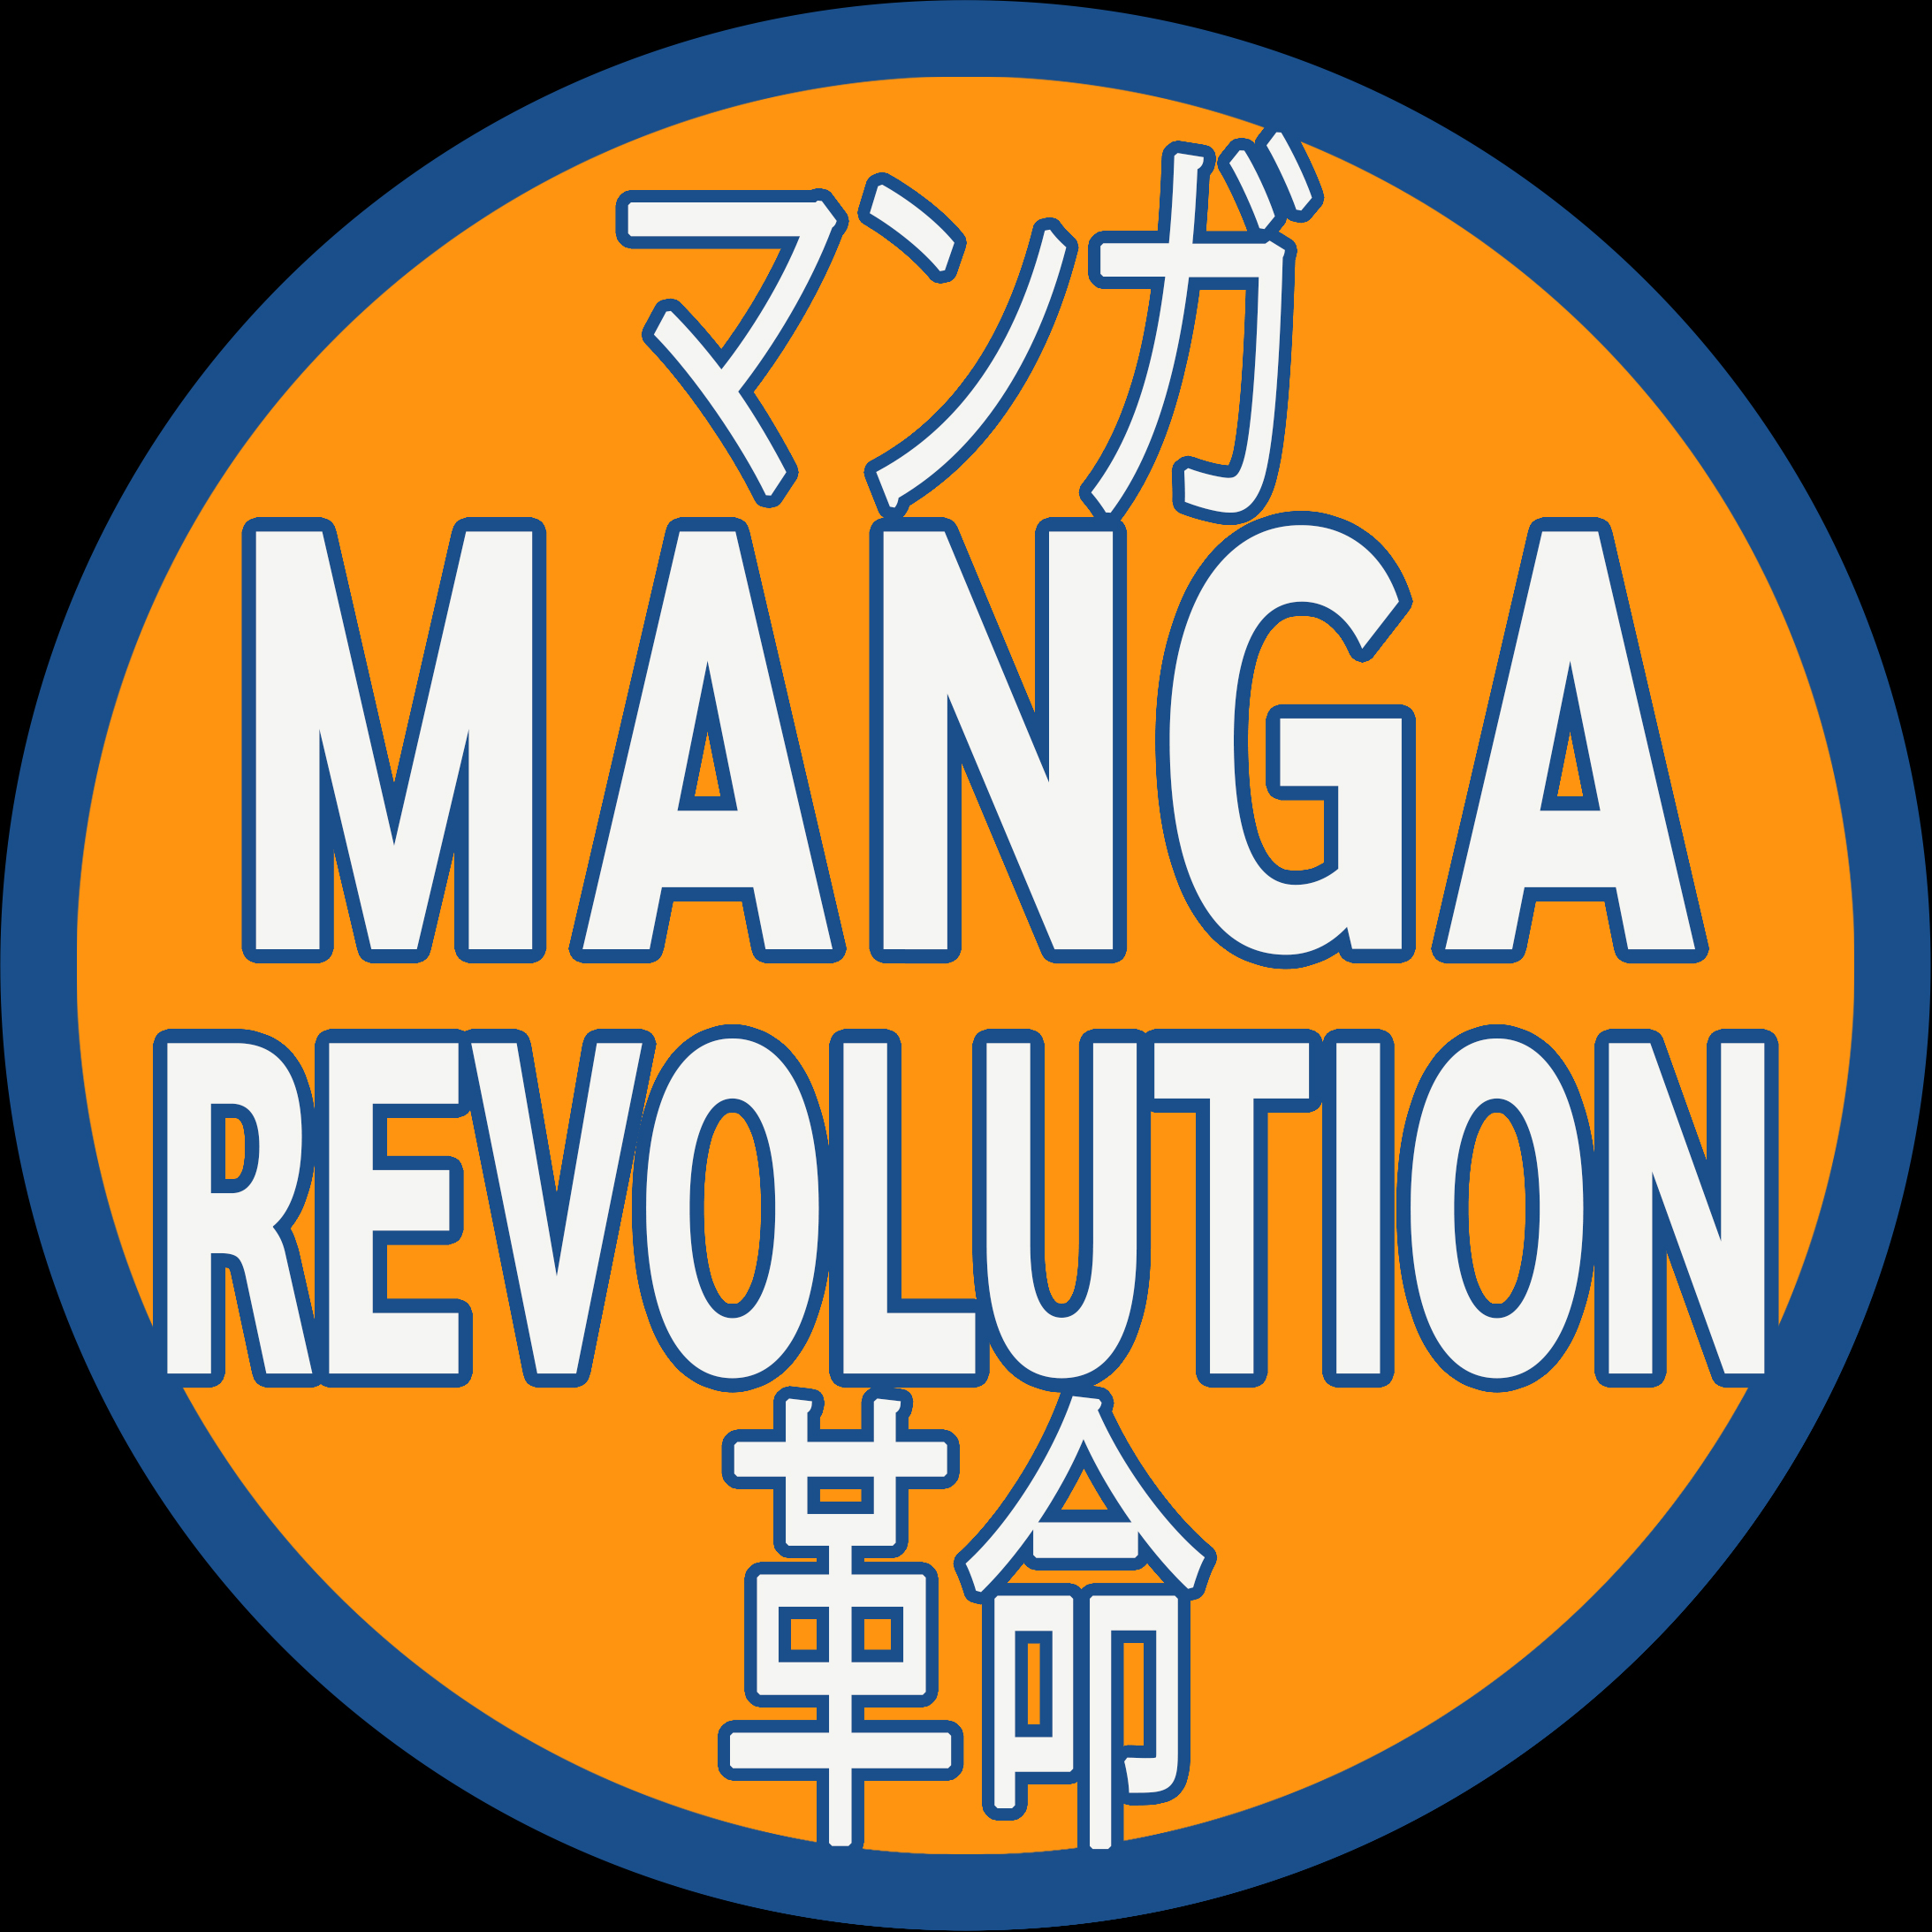 Dragon Ball Super Chapter 88 Review - Manga Revolution Podcast Episode 47